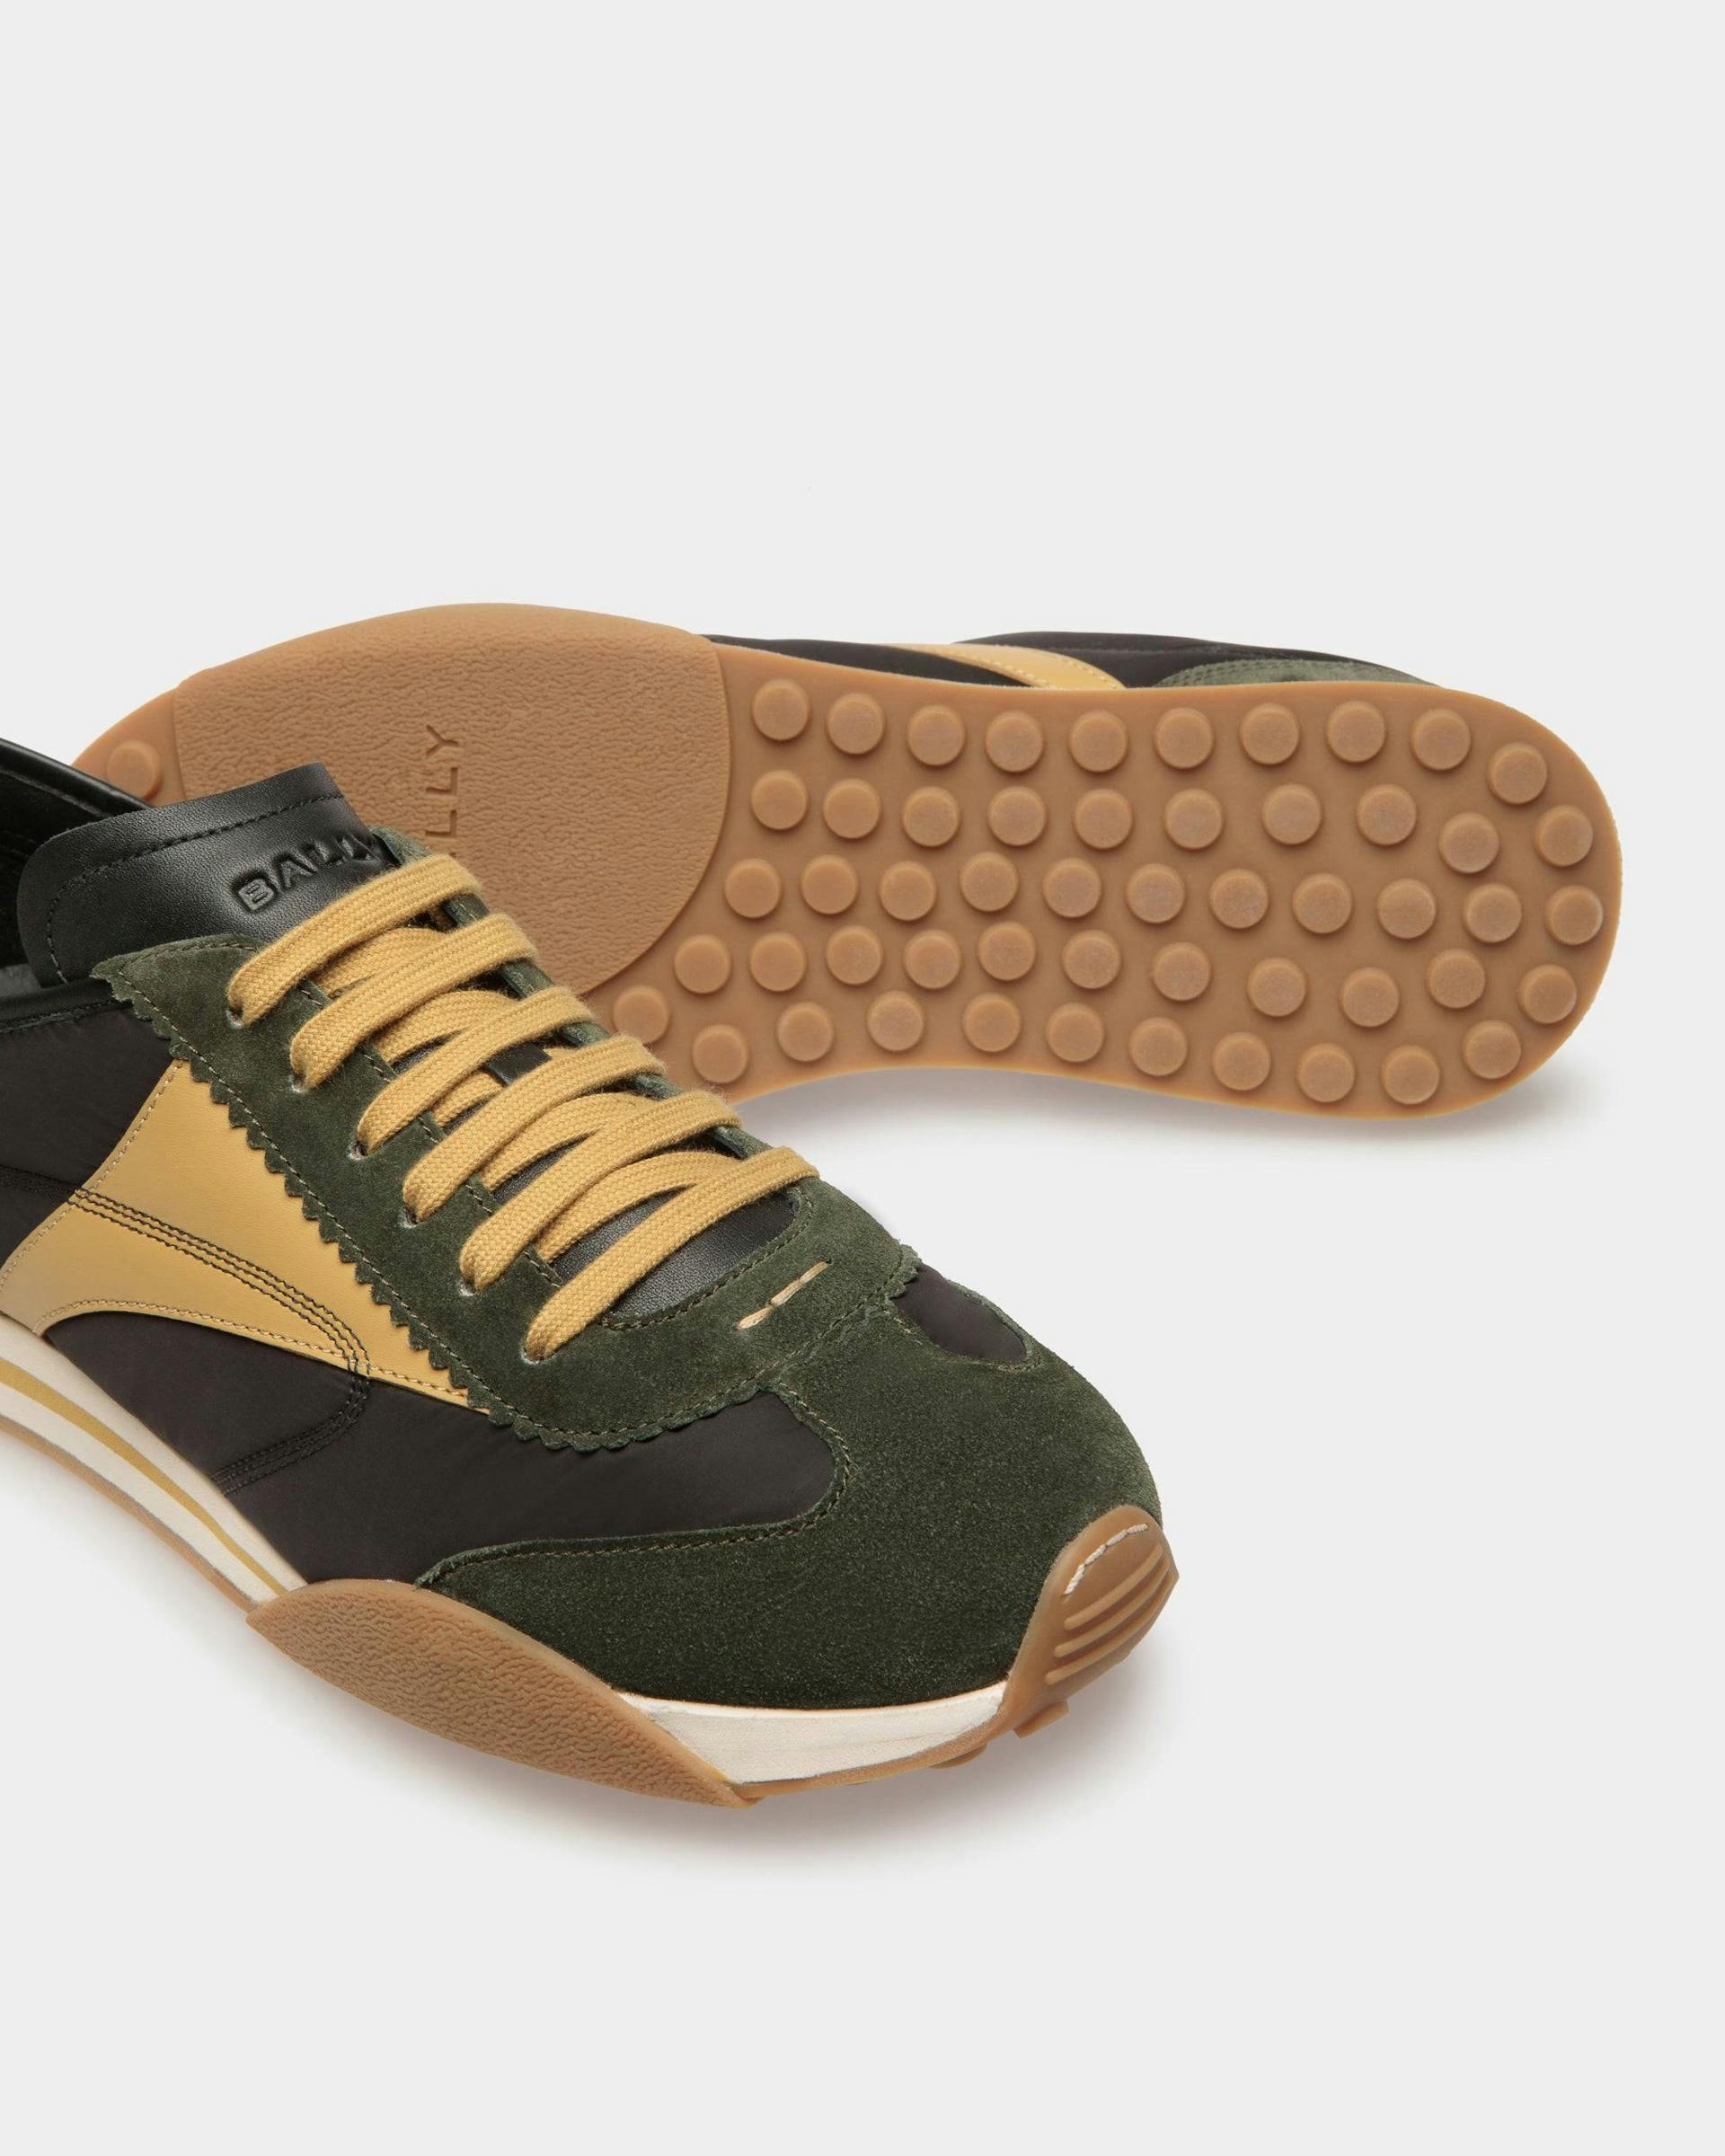 Sneakers Sussex En cuir et tissu vert et noir - Homme - Bally - 05